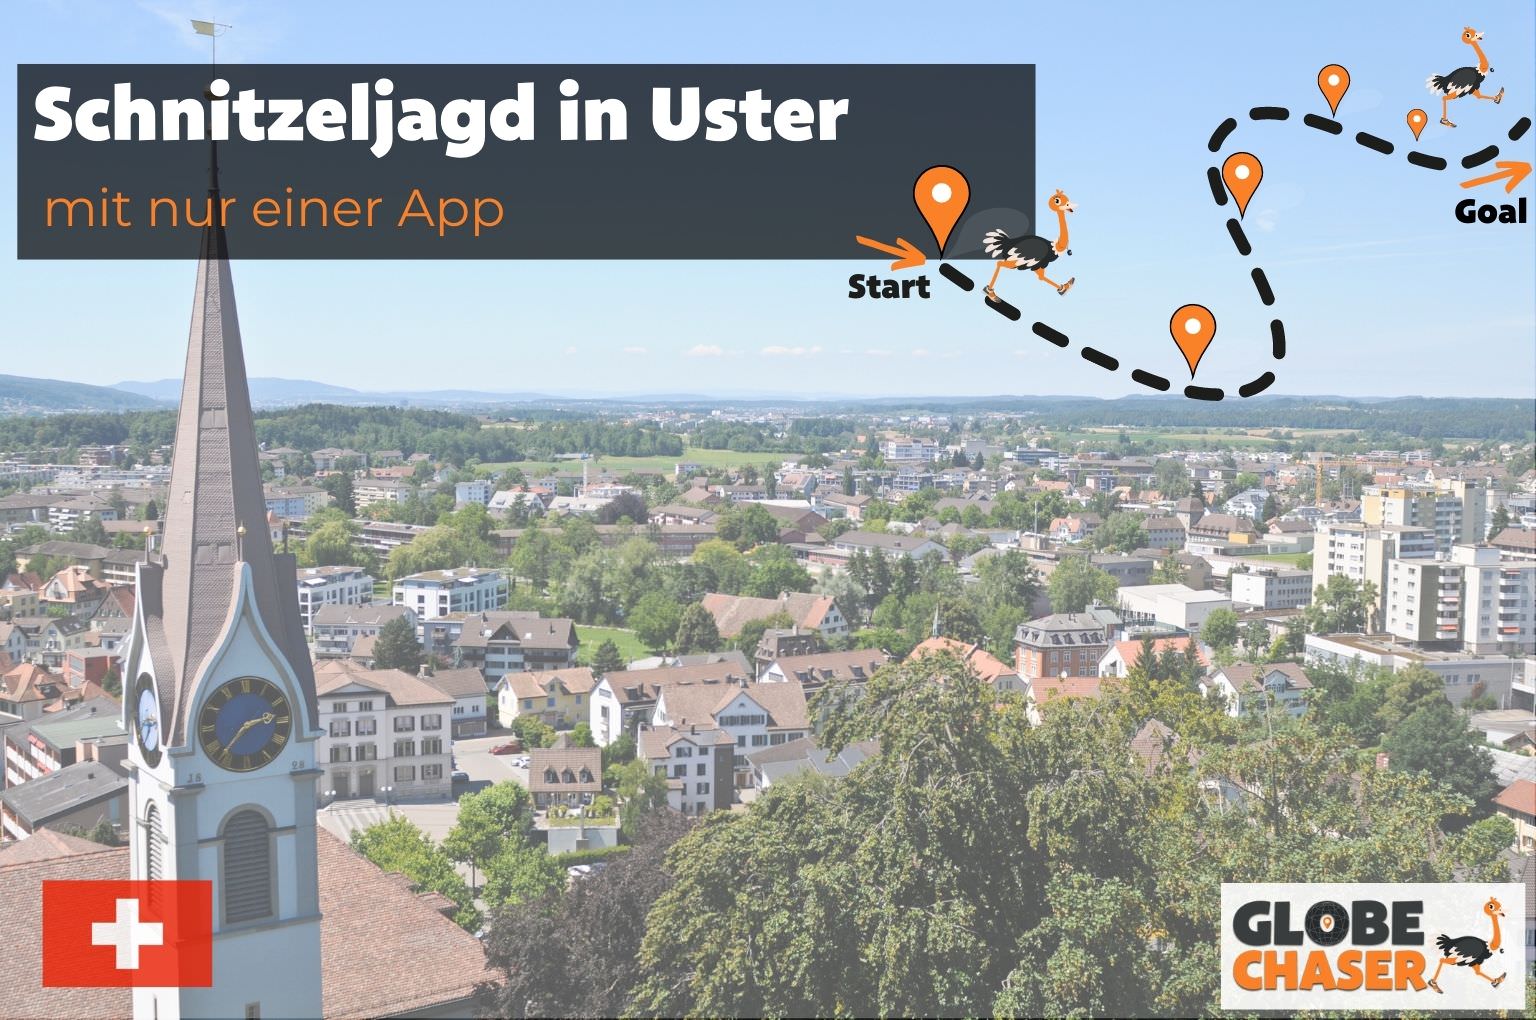 Schnitzeljagd in Uster mit App - Globe Chaser Erlebnisse Schweiz